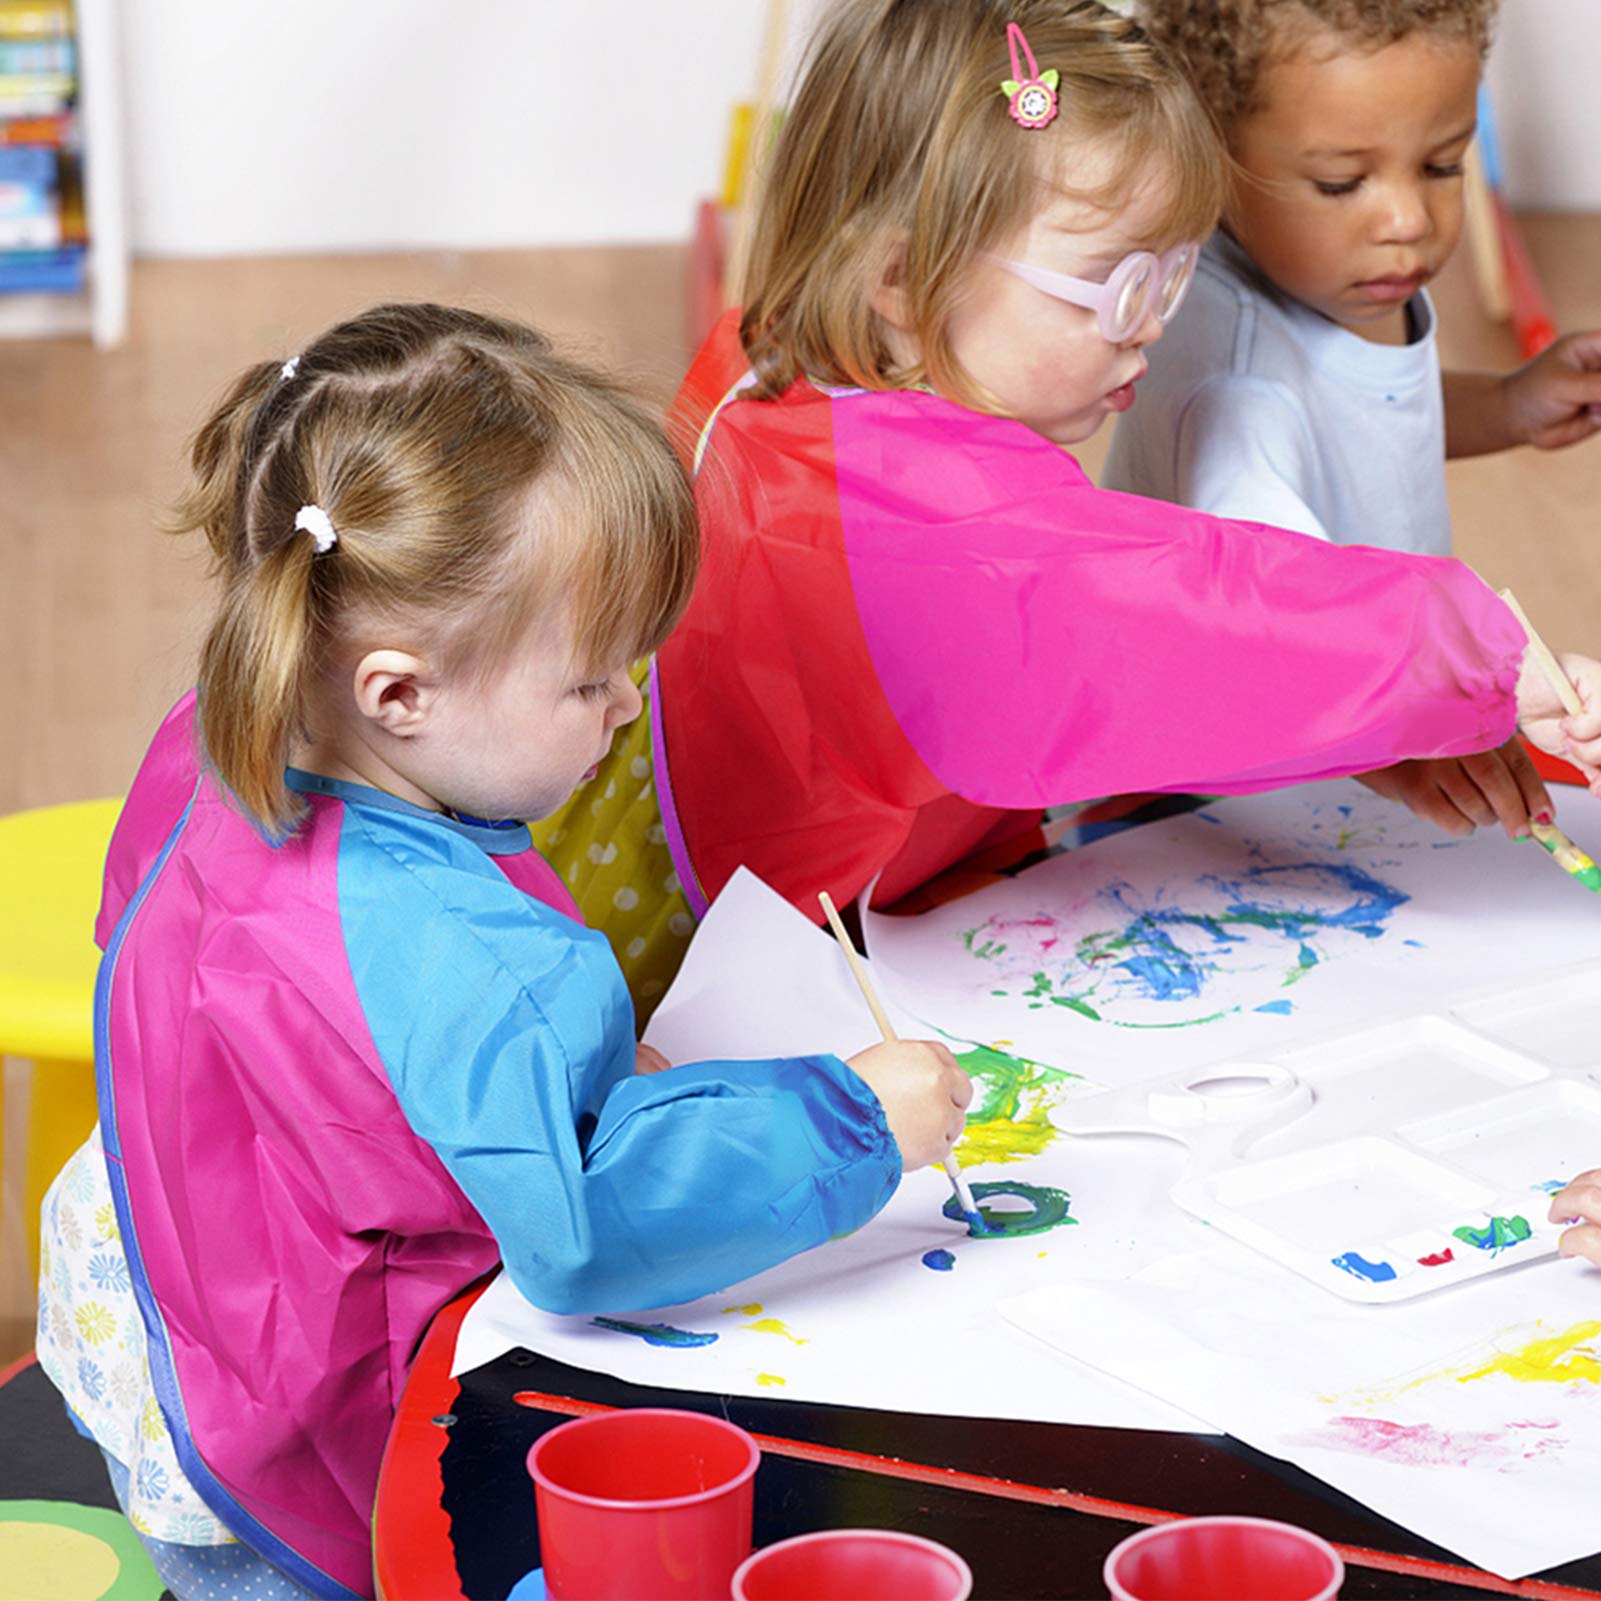 Zkptops 6 Pack Kids Art Smocks Waterproof Kids Painting Aprons Toddler Art Smock Kids Paint Smock with Long Sleeve 3 Roomy Pockets for Age 3-7 Years